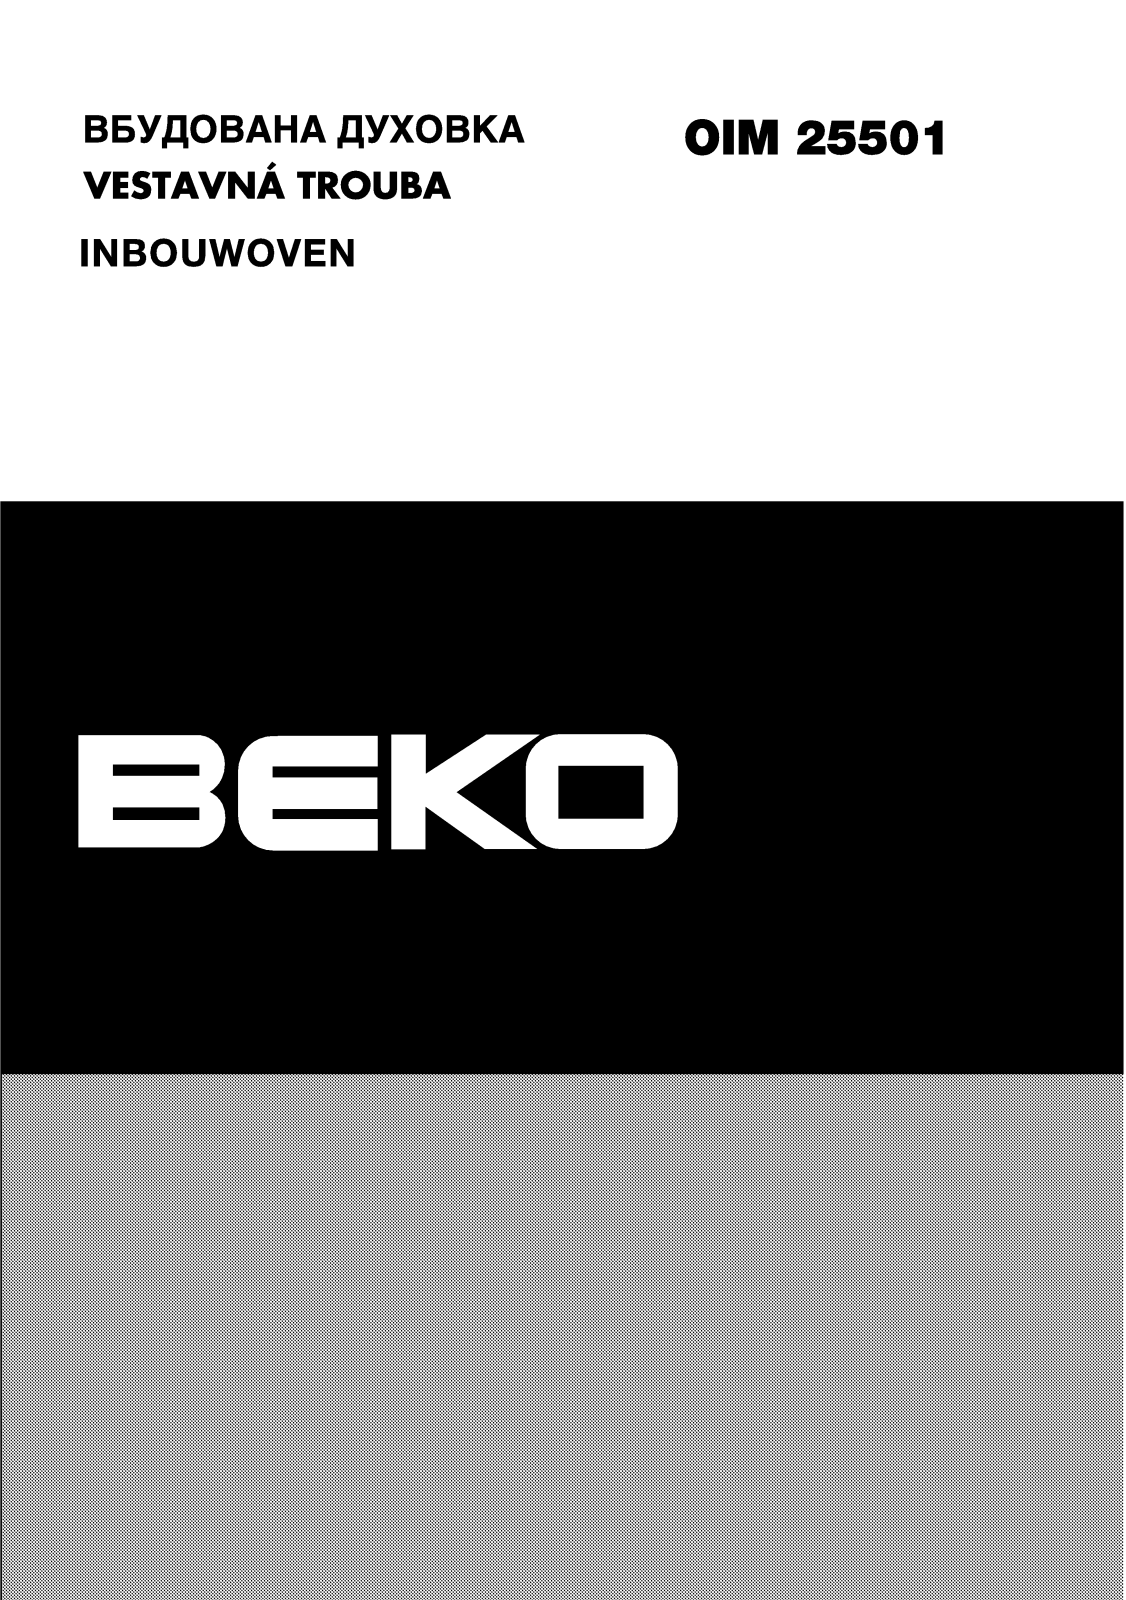 Beko OIM 25501 Manual